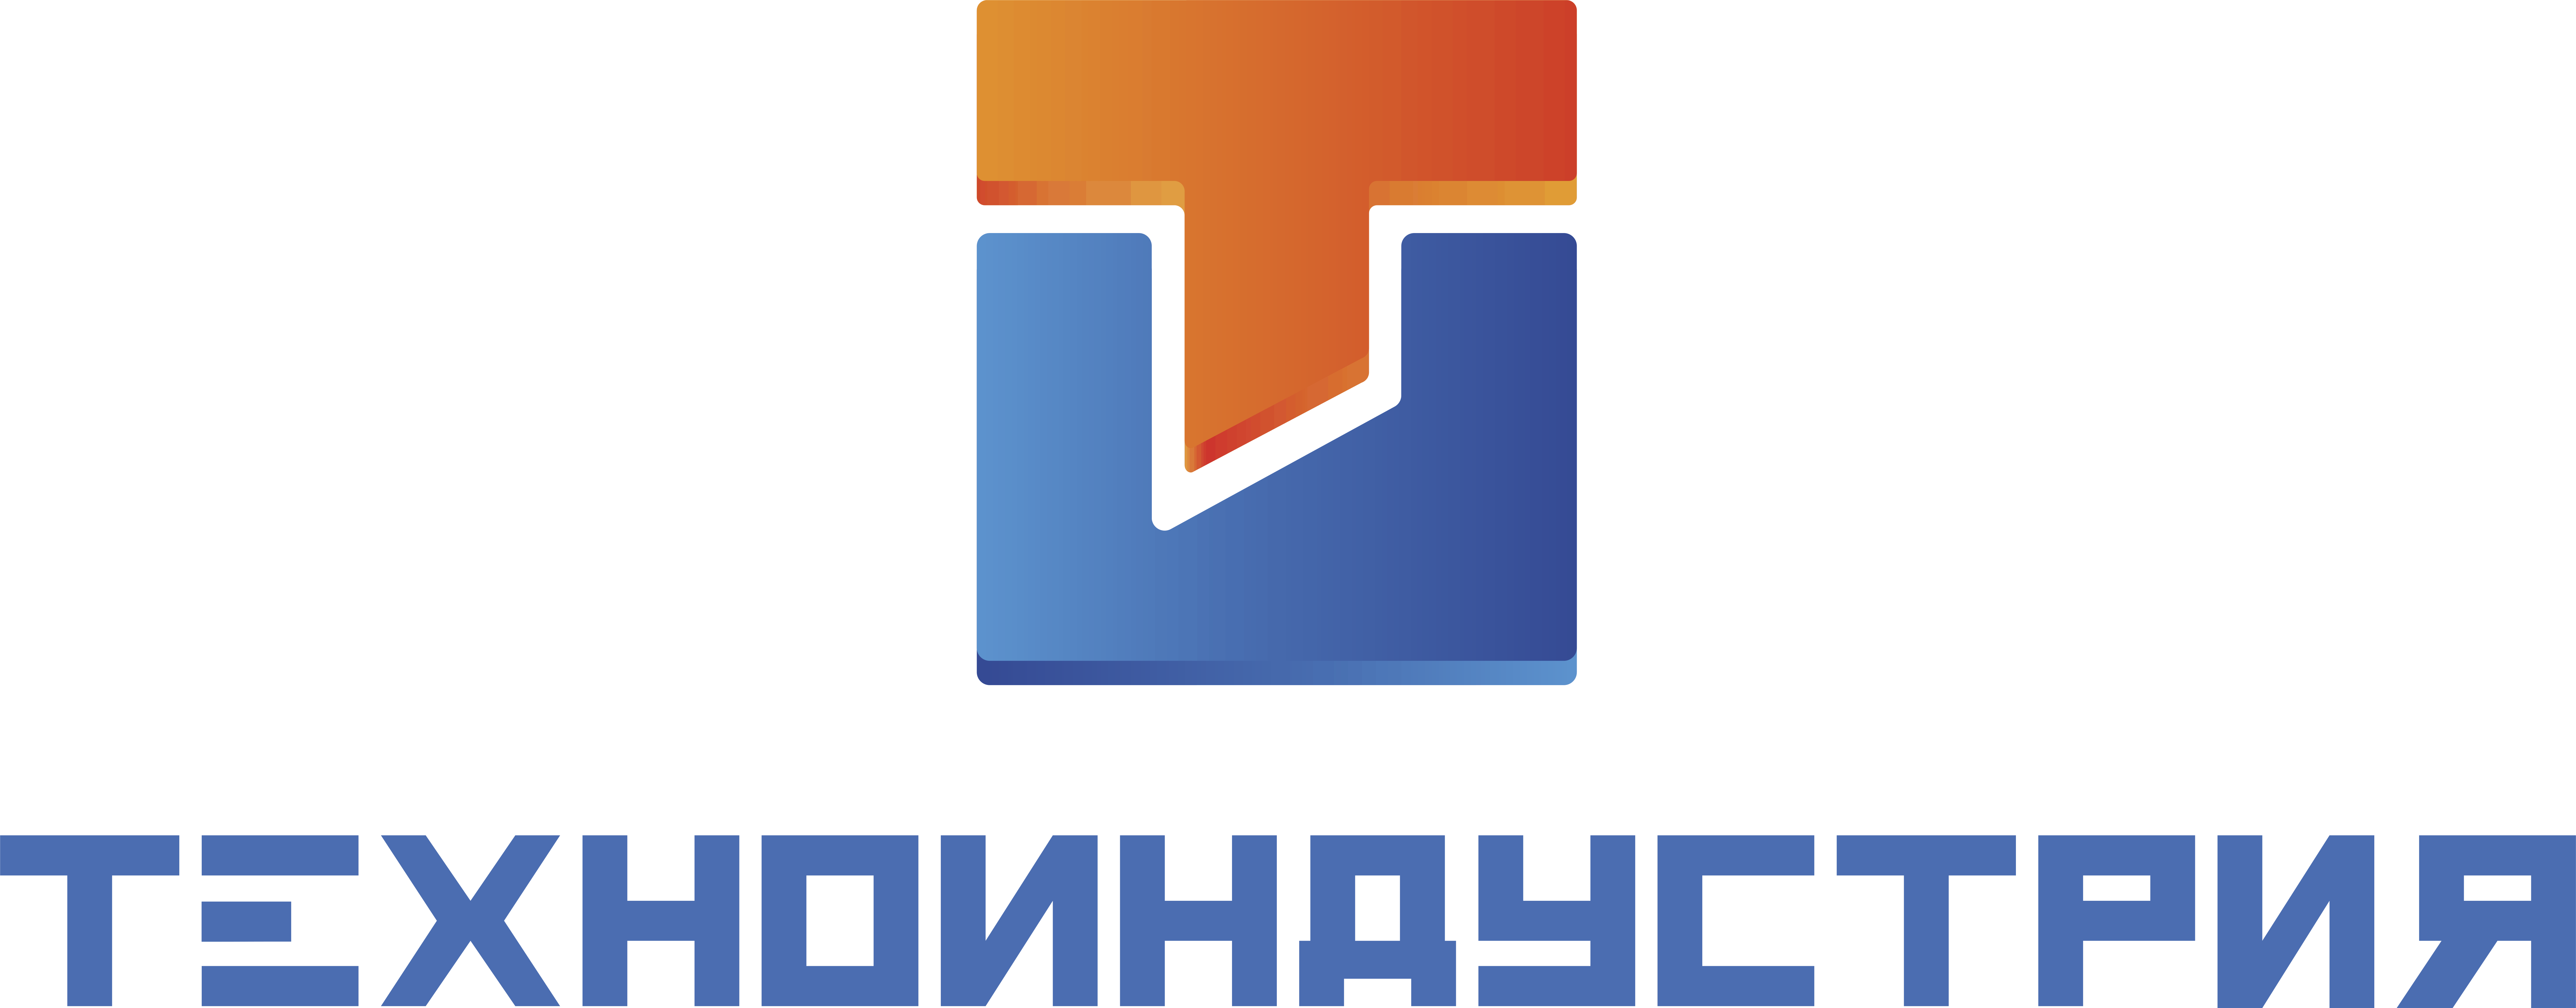 Tehnoindustriy logo